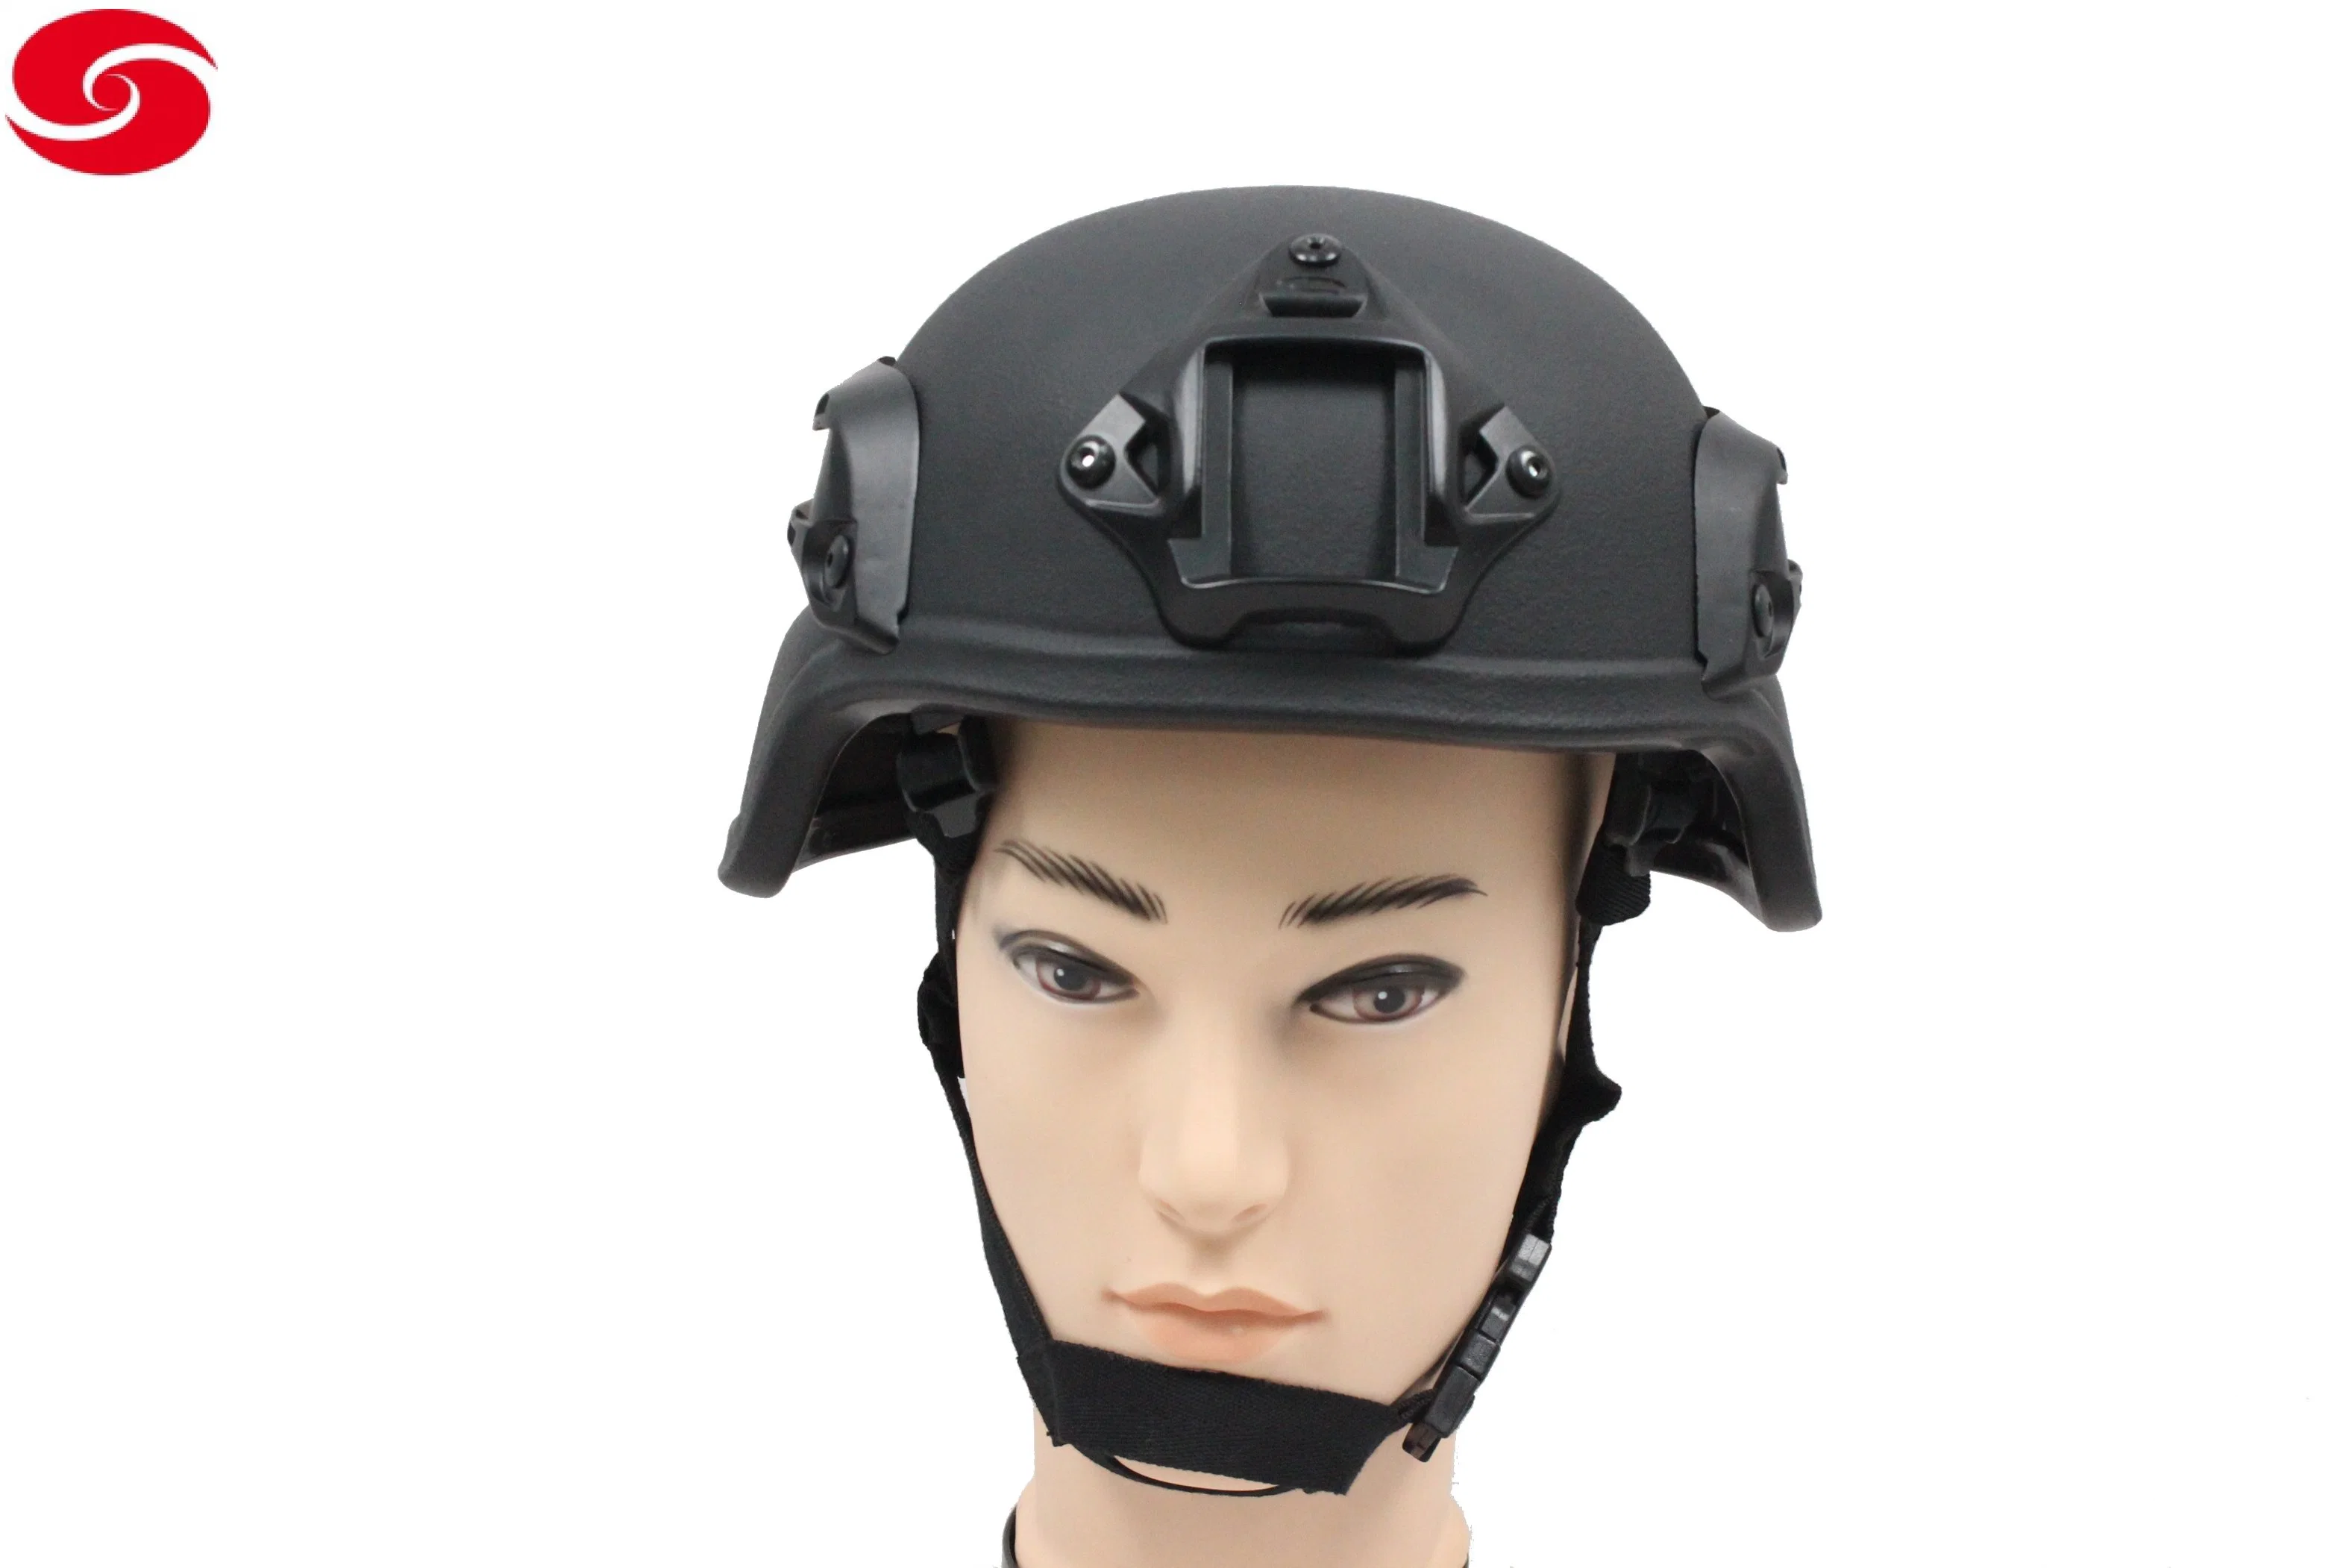 Nij Iiia Agaist. 44 Mich Bullet Proof Ballistic Helmet Custom Level 4 Military Equipment Army Tactical Helmet